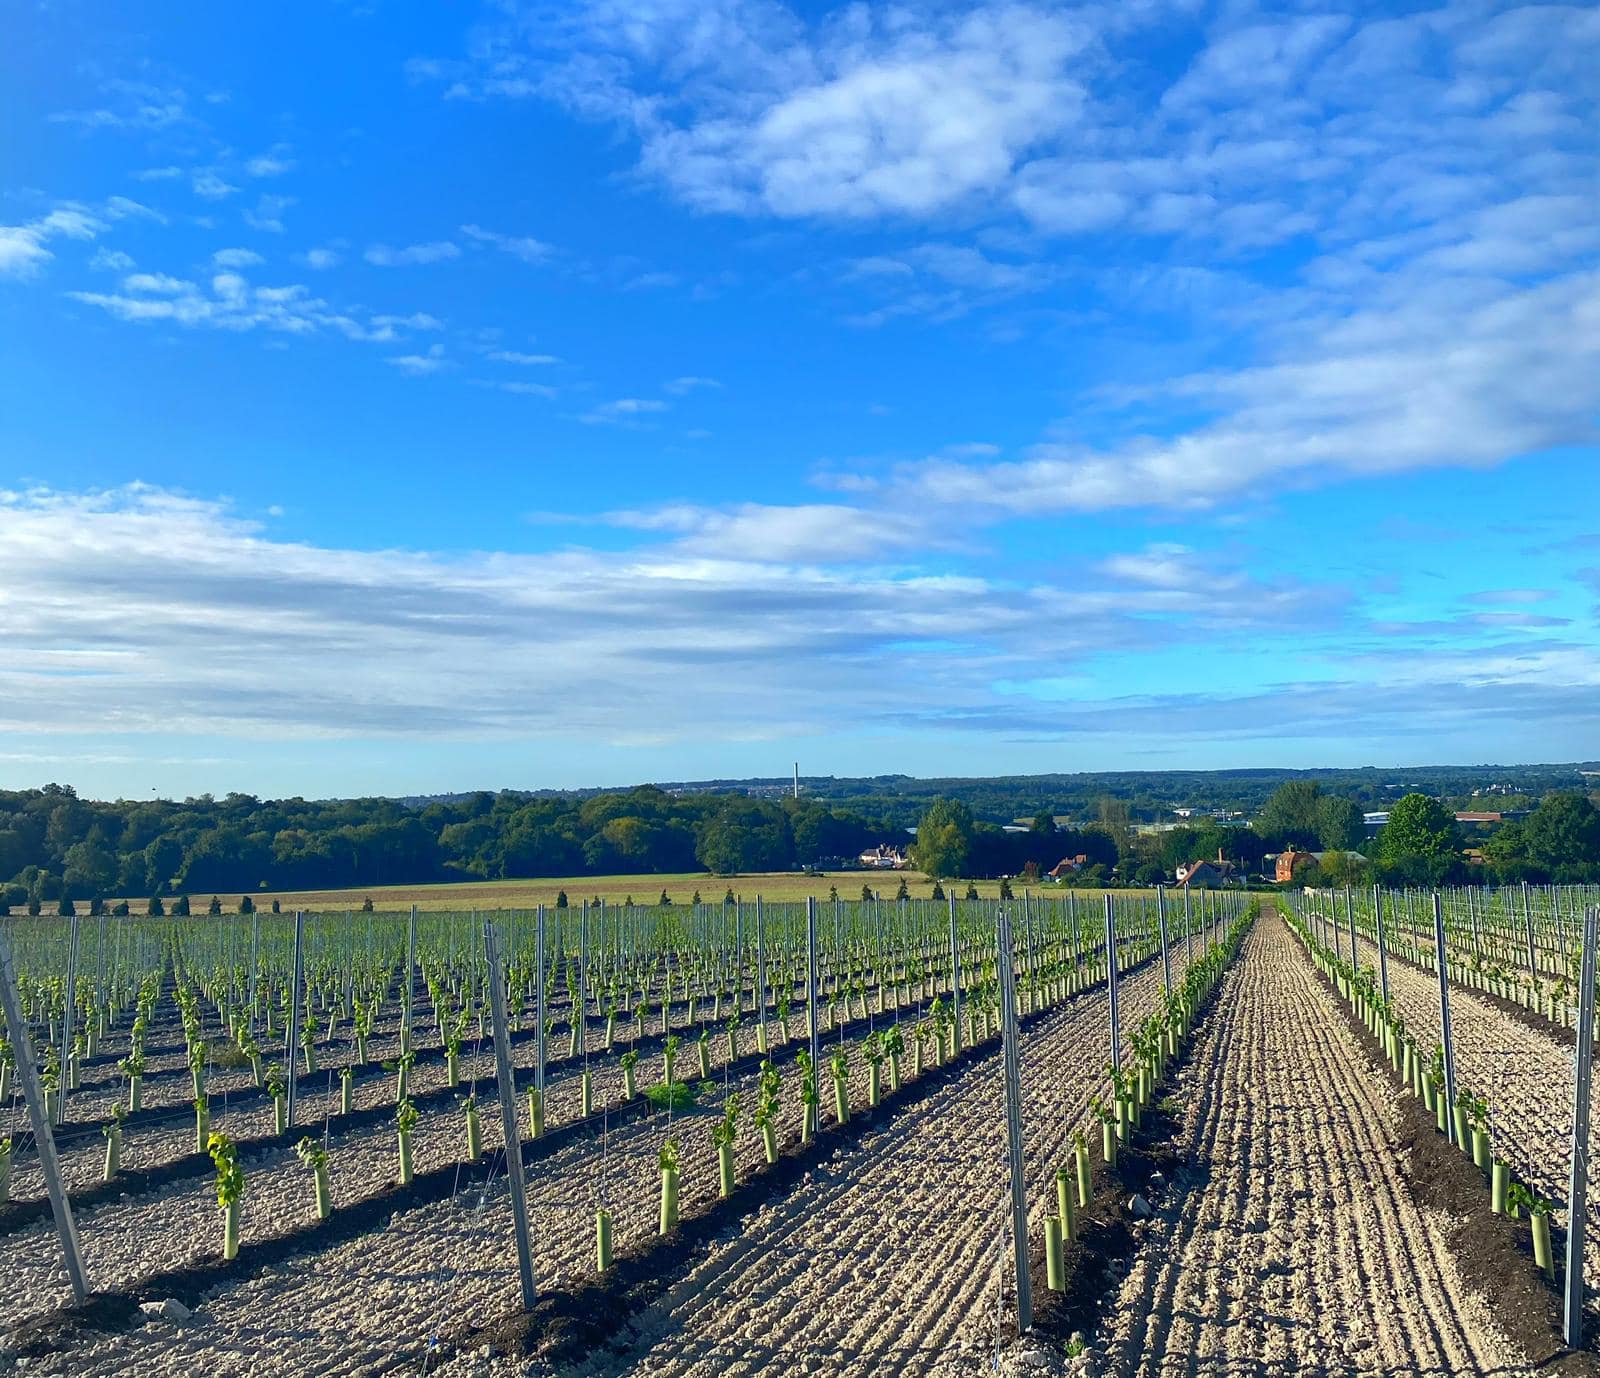 vineyard trellis system